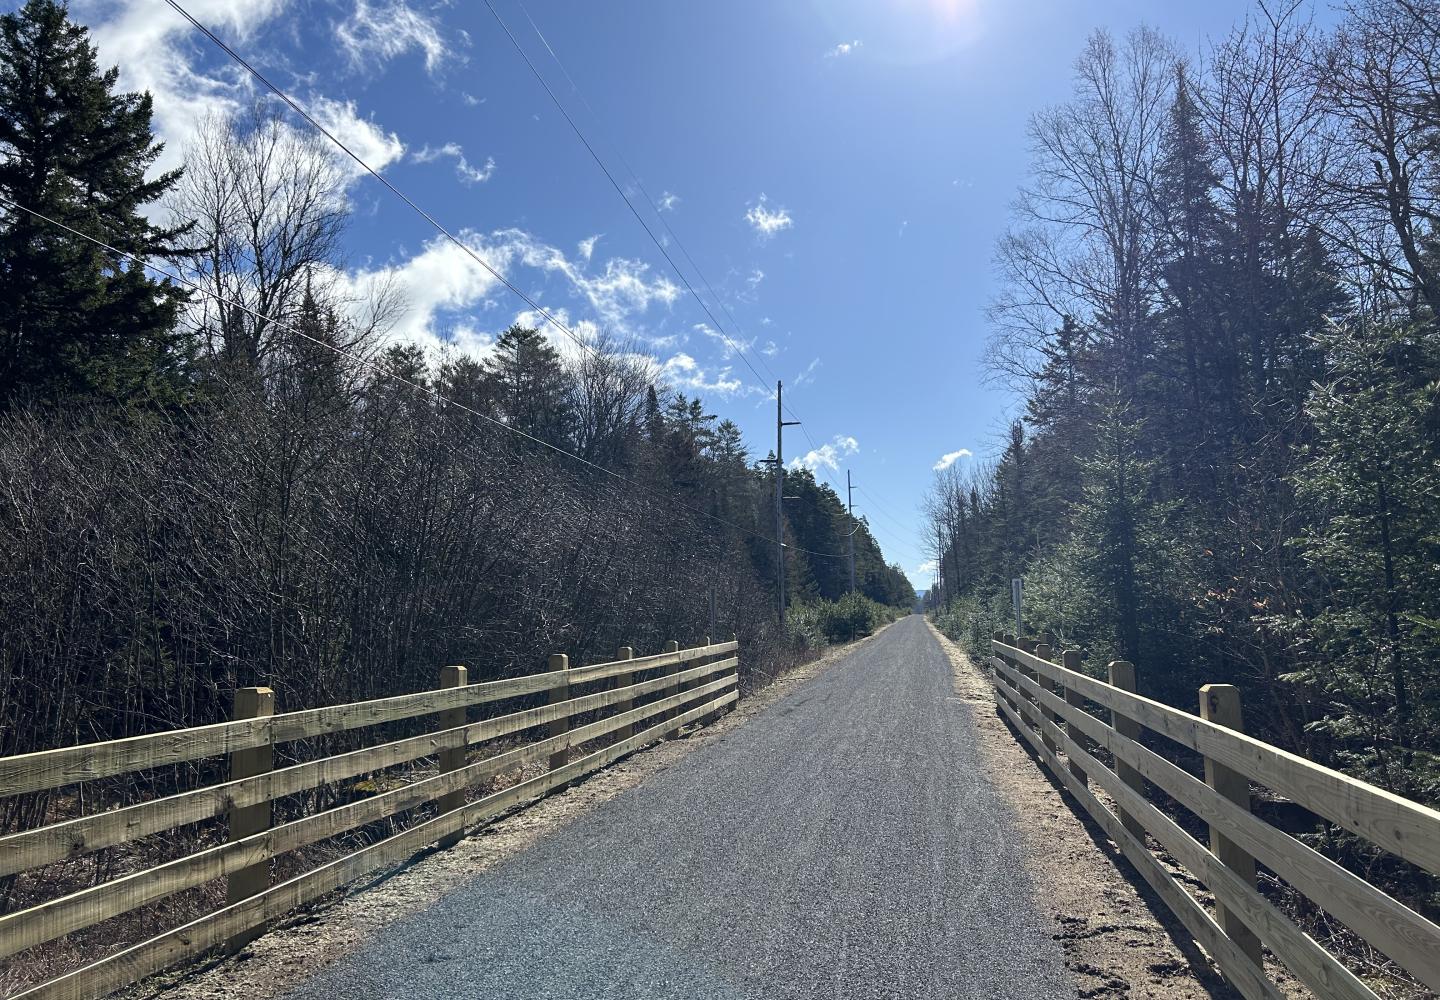 Phase 1 of the Adirondack Rail Trail